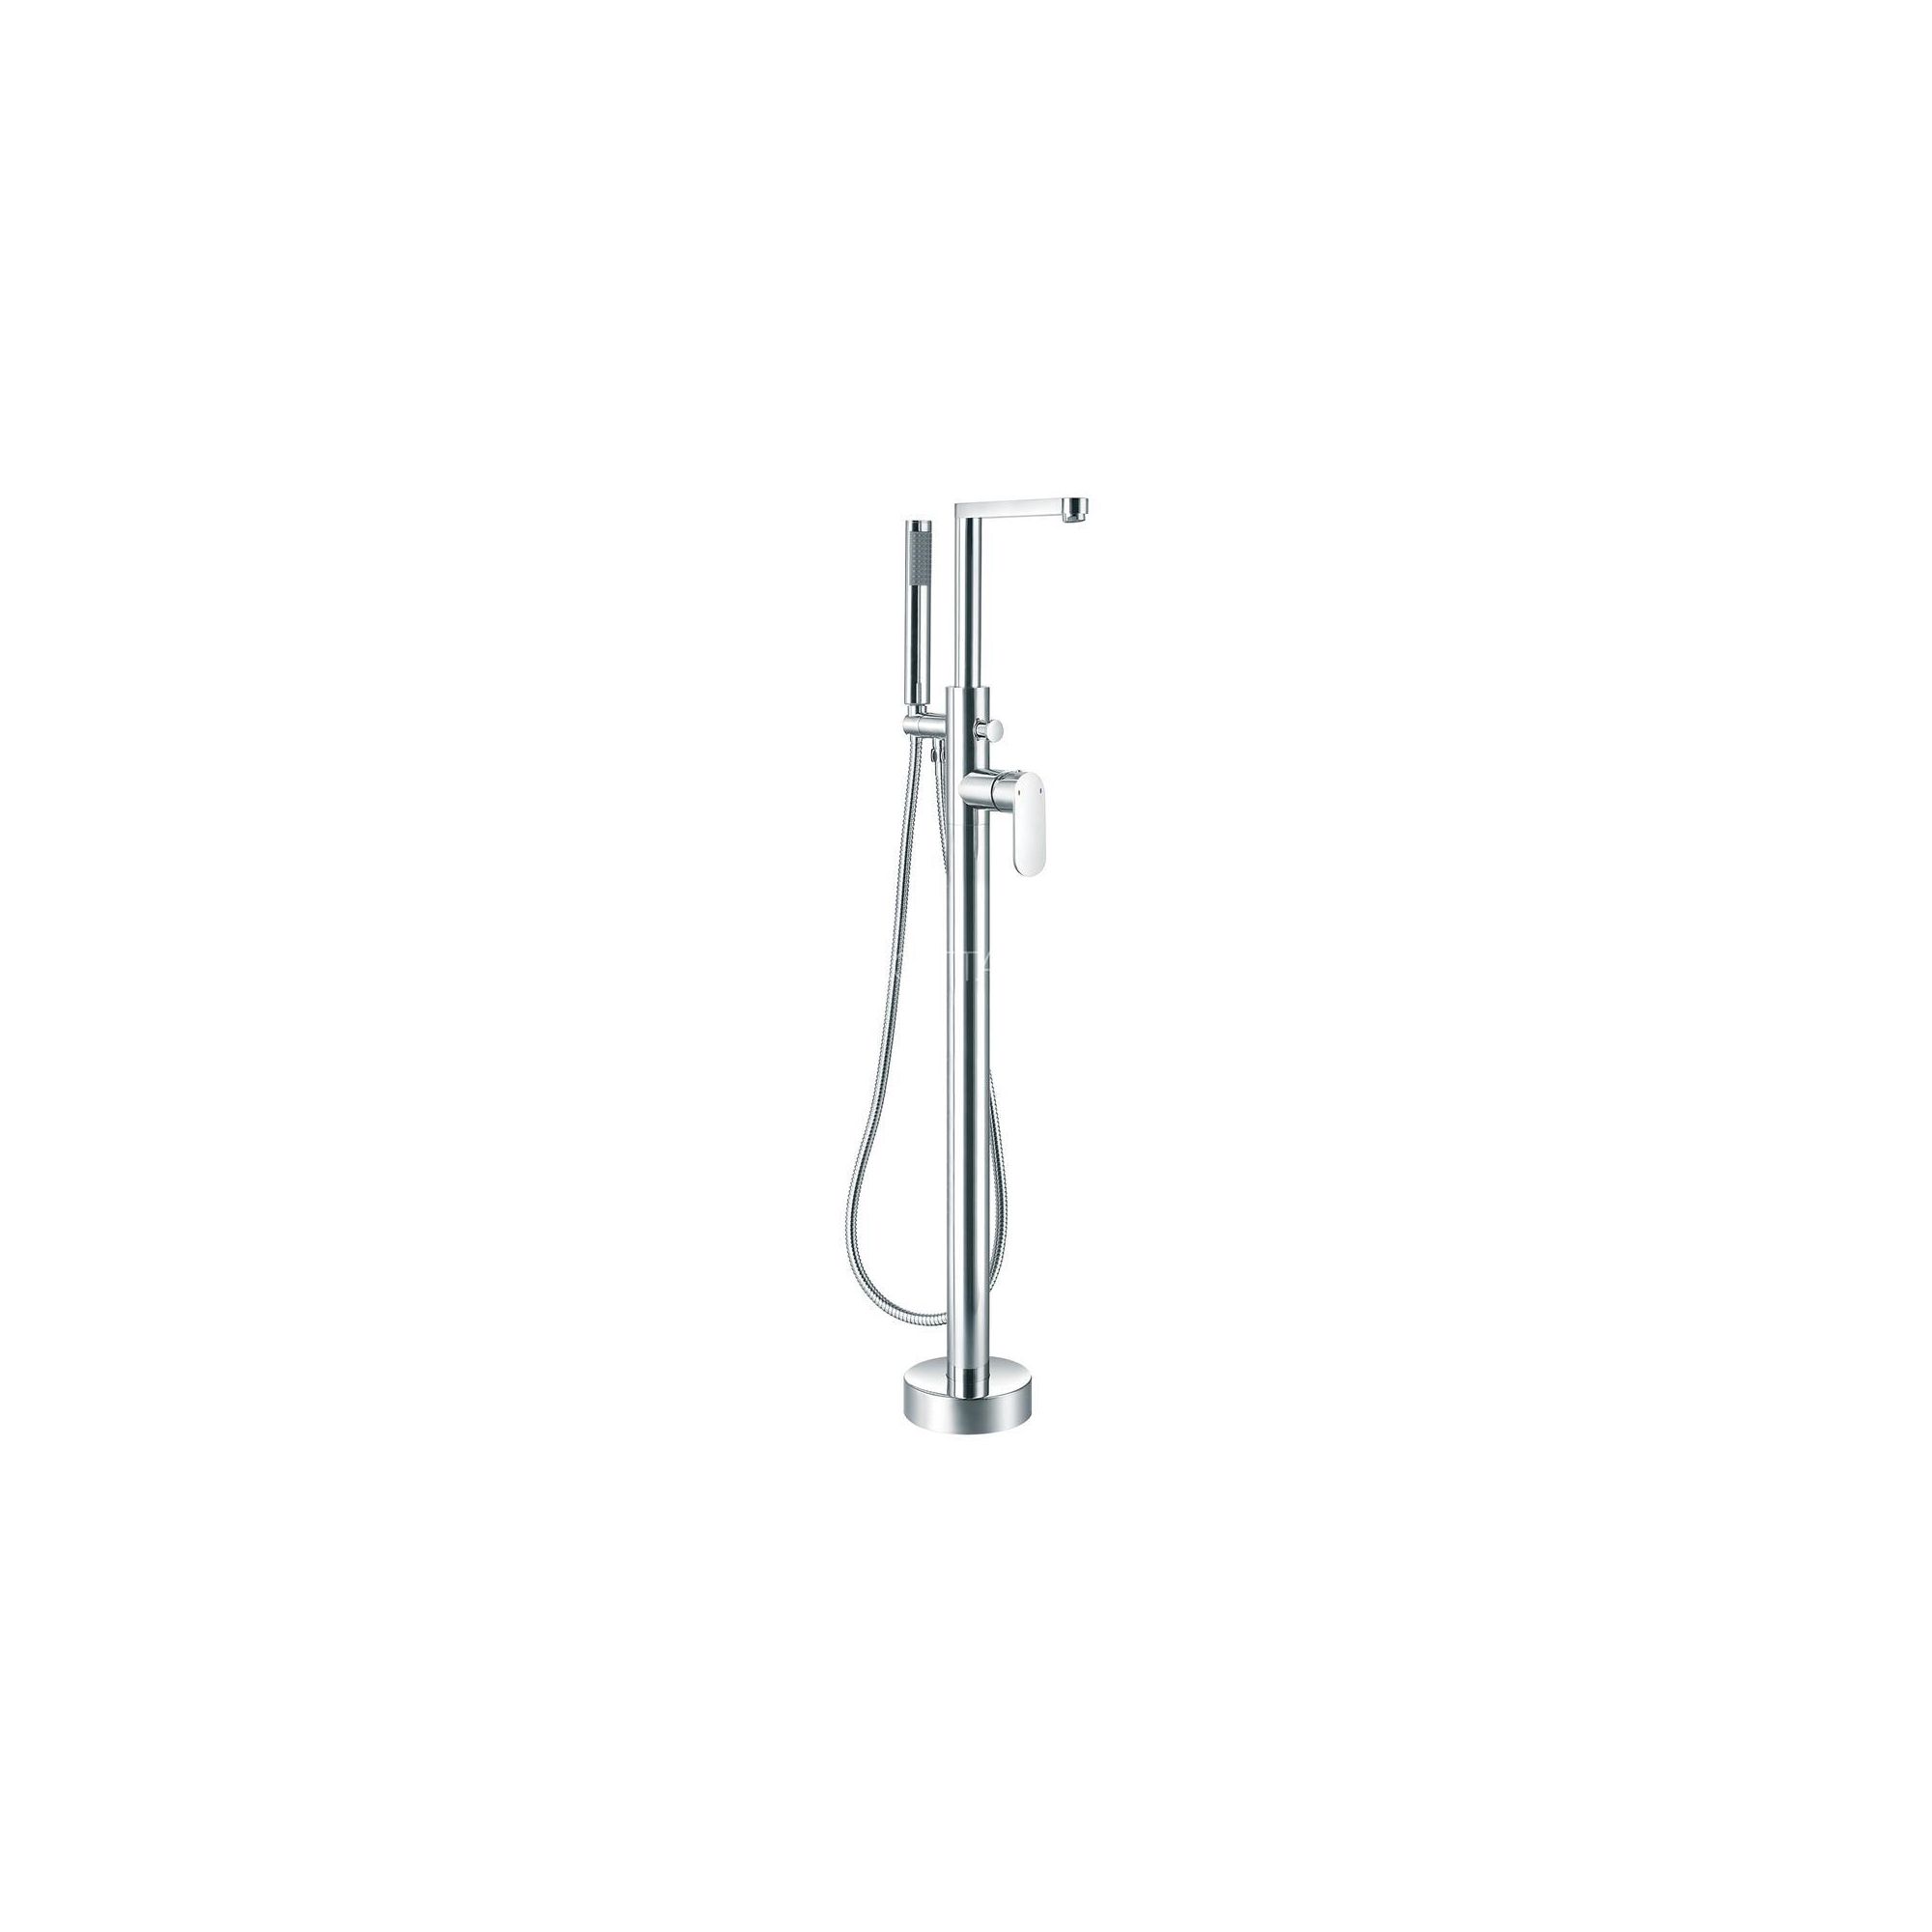 Sagittarius Metro Floor Mounted Bath Shower Mixer Tap with Shower Kit at Tesco Direct